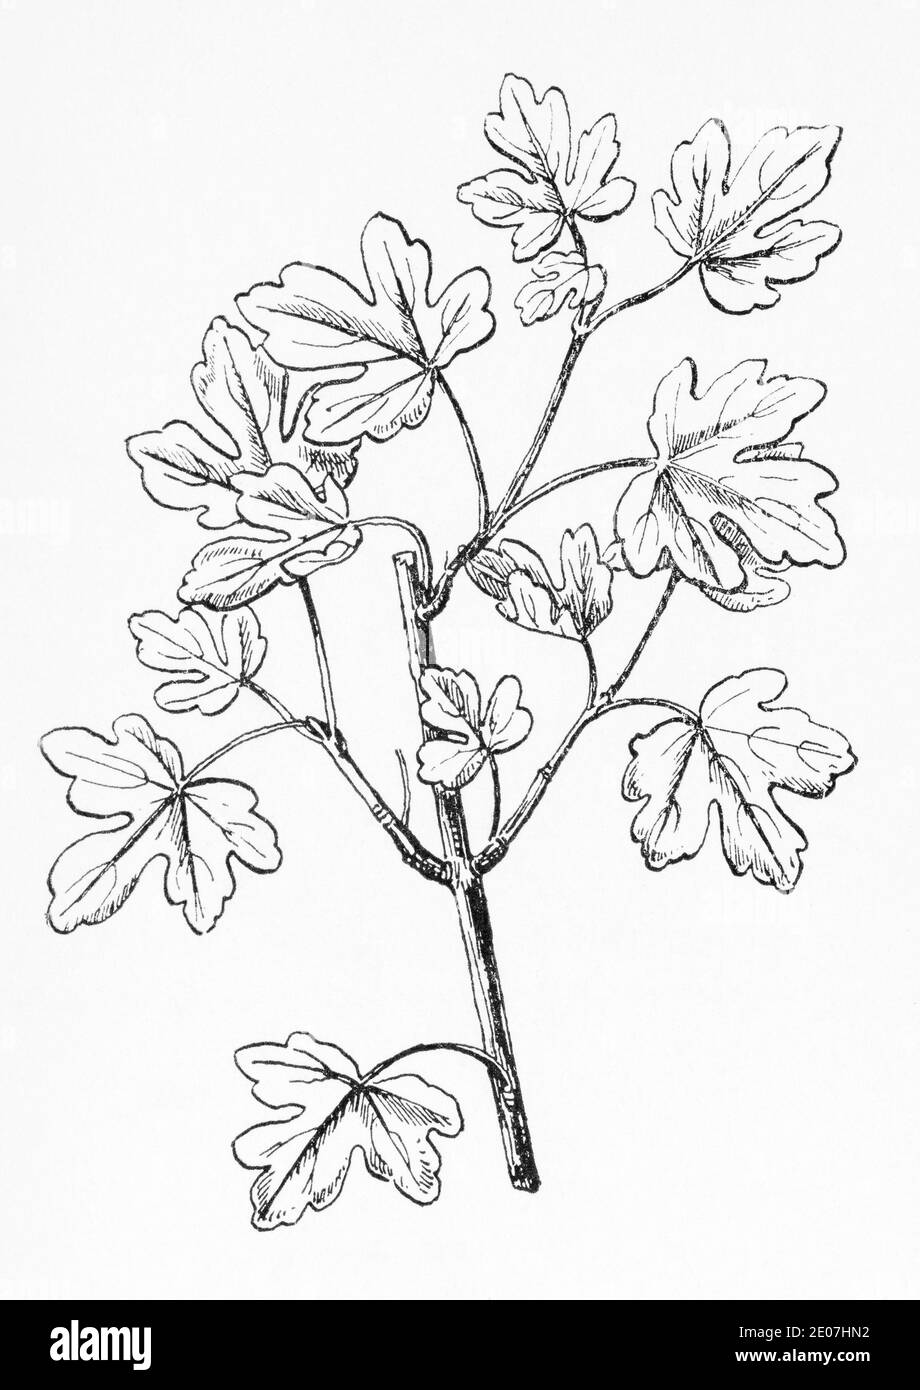 Antiguo grabado de ilustración botánica de campo Arce / Acer campestre. Planta herbaria medicinal tradicional. Ver Notas Foto de stock